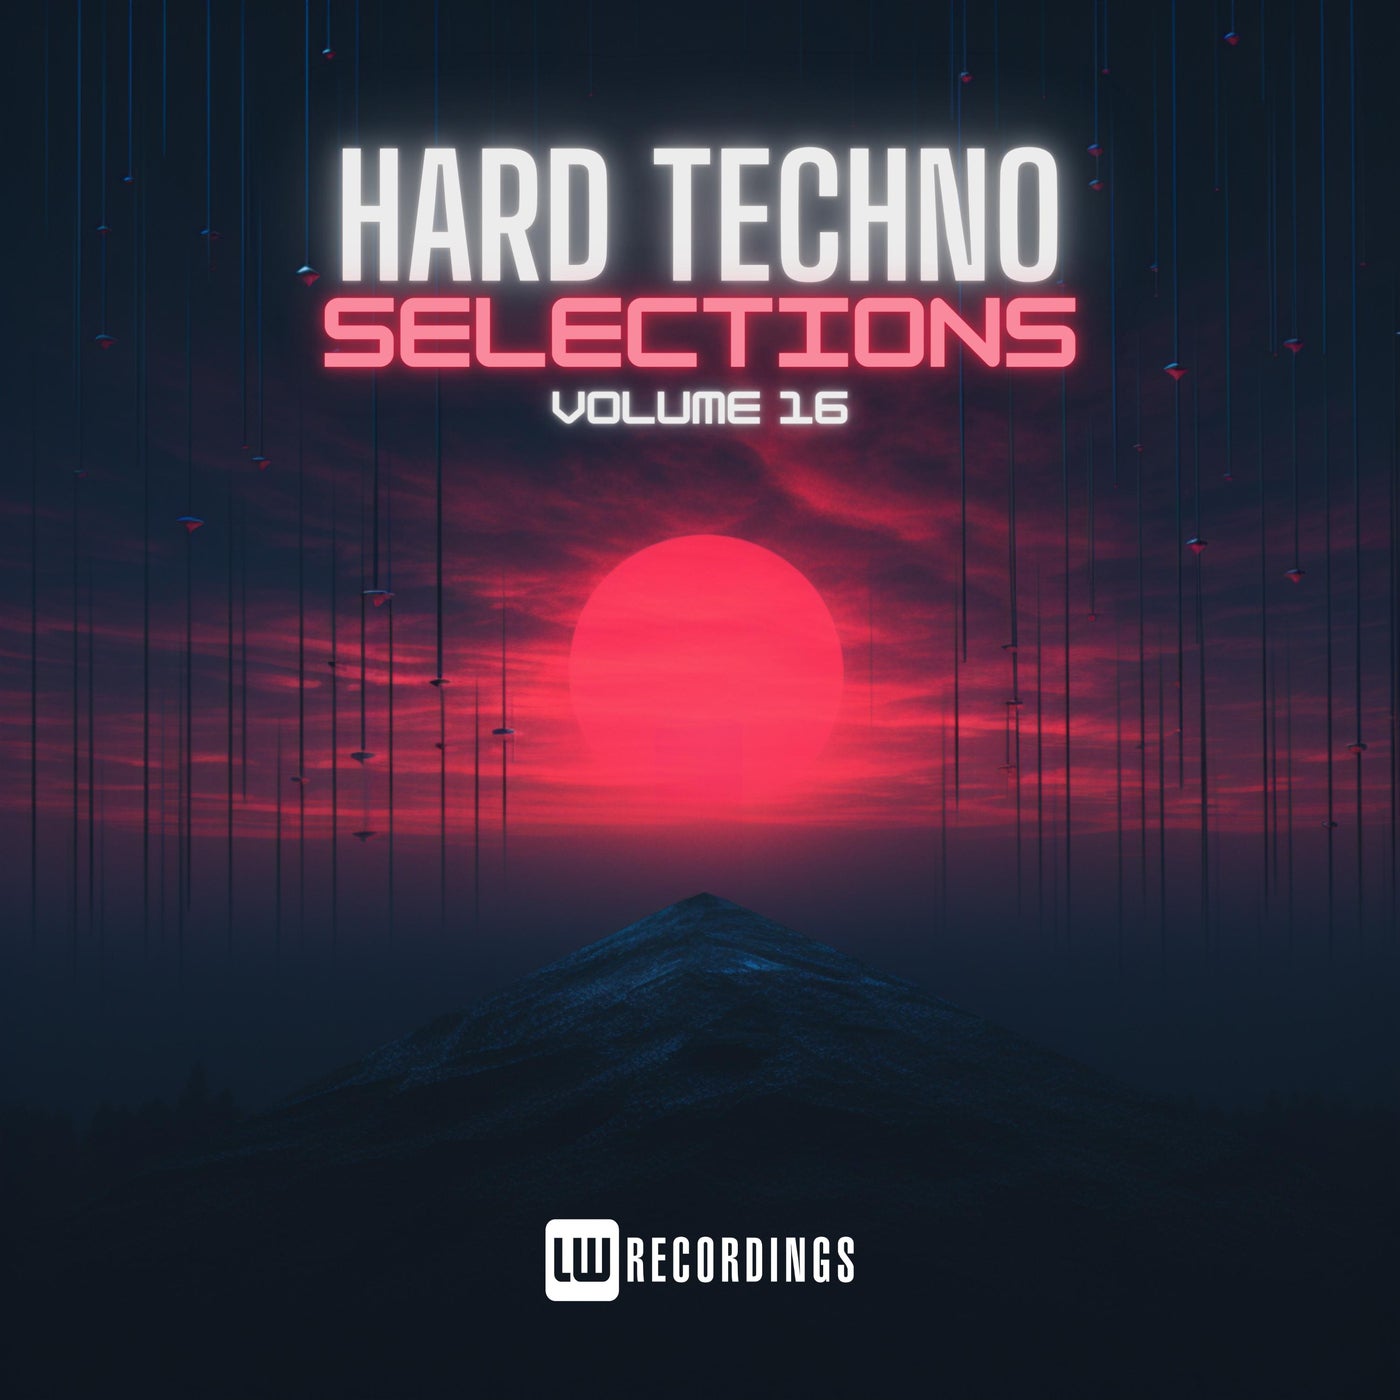 Hard Techno Selections, Vol. 16